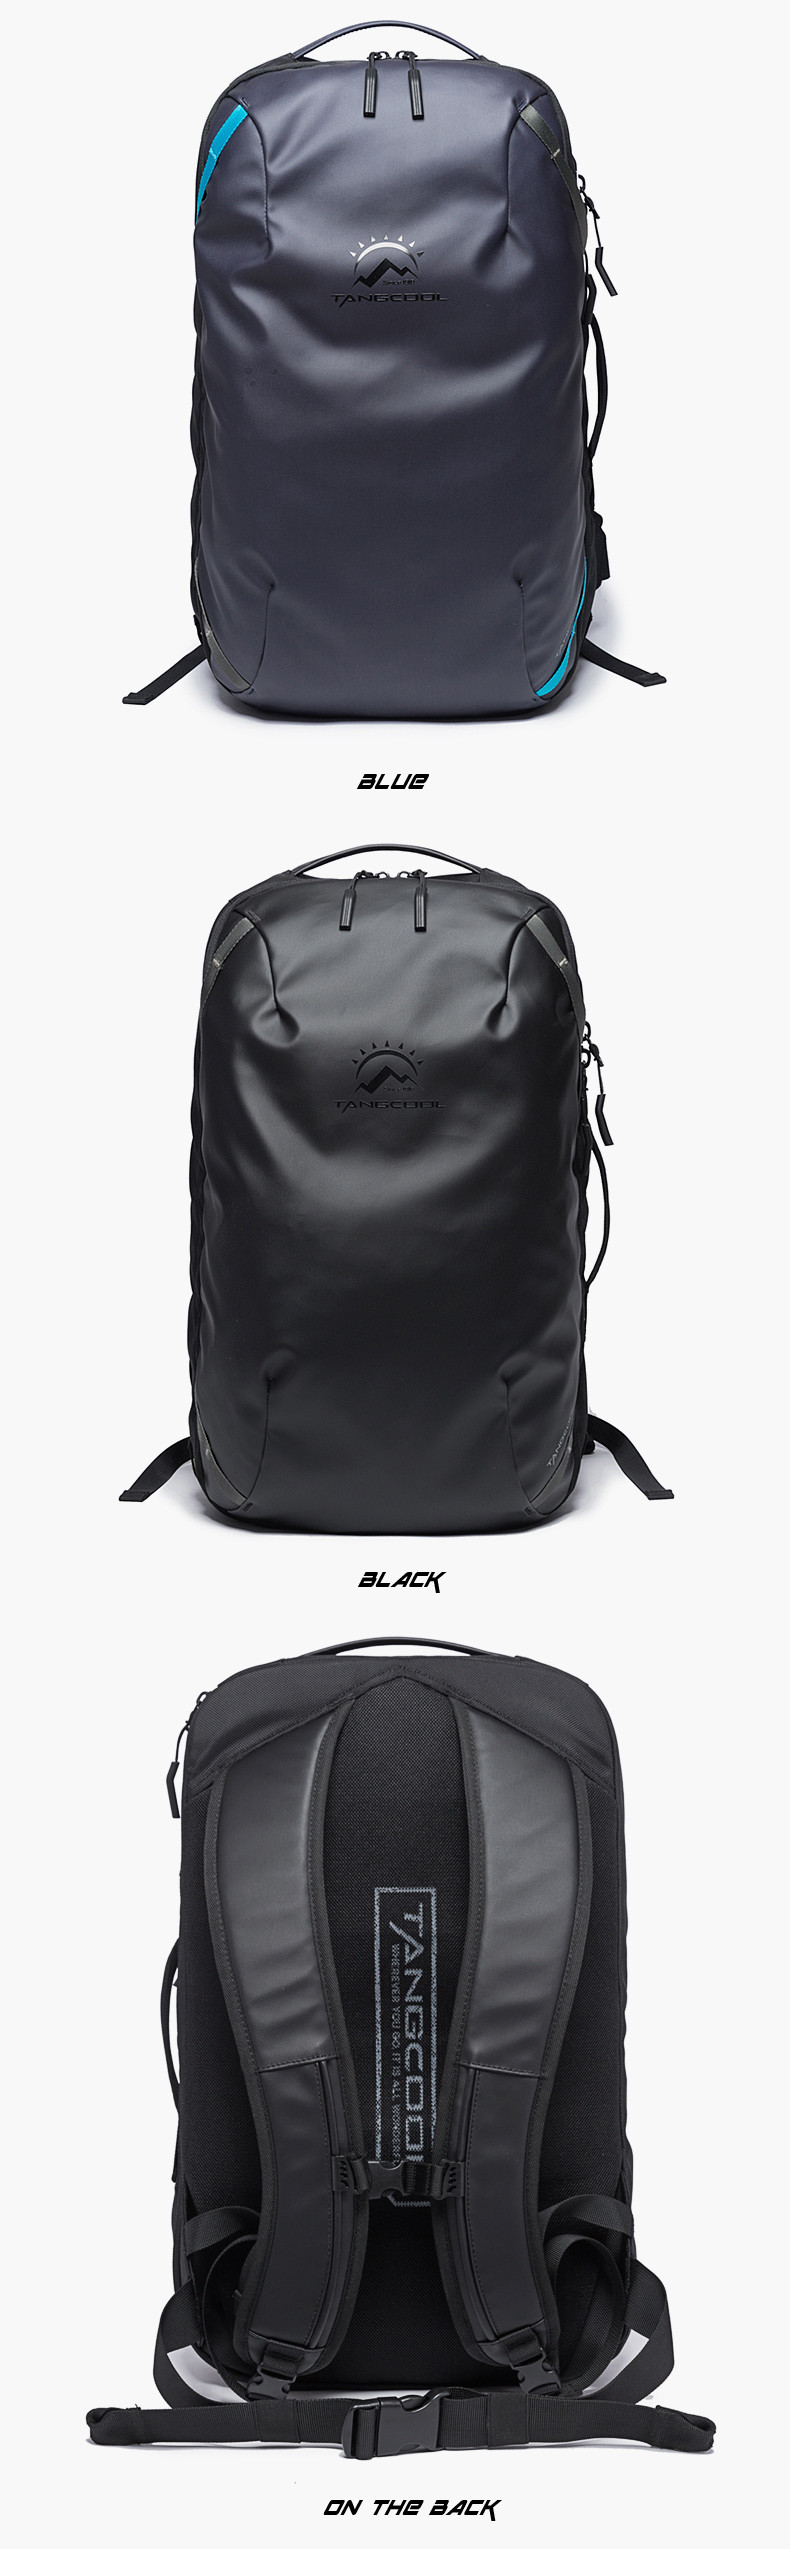 Tangcool-TC735-Men-Backpack-156inch-Laptop-Bag-Waterproof-Shoulder-Bag-Outdoor-Travel-Bag-1623279-4